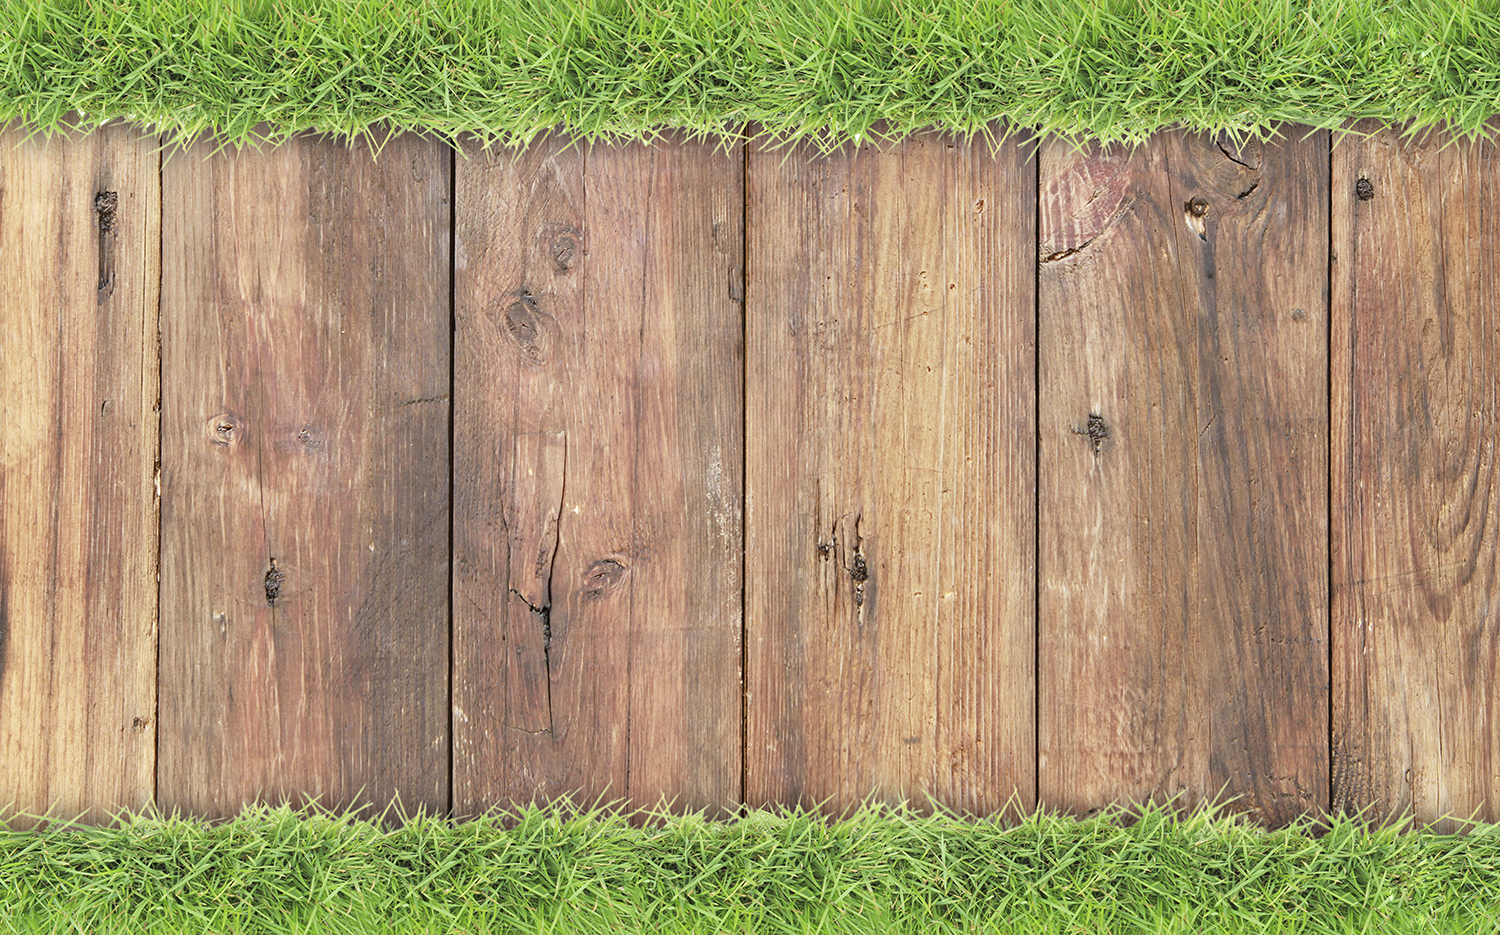 Wood plank walkway on grass.